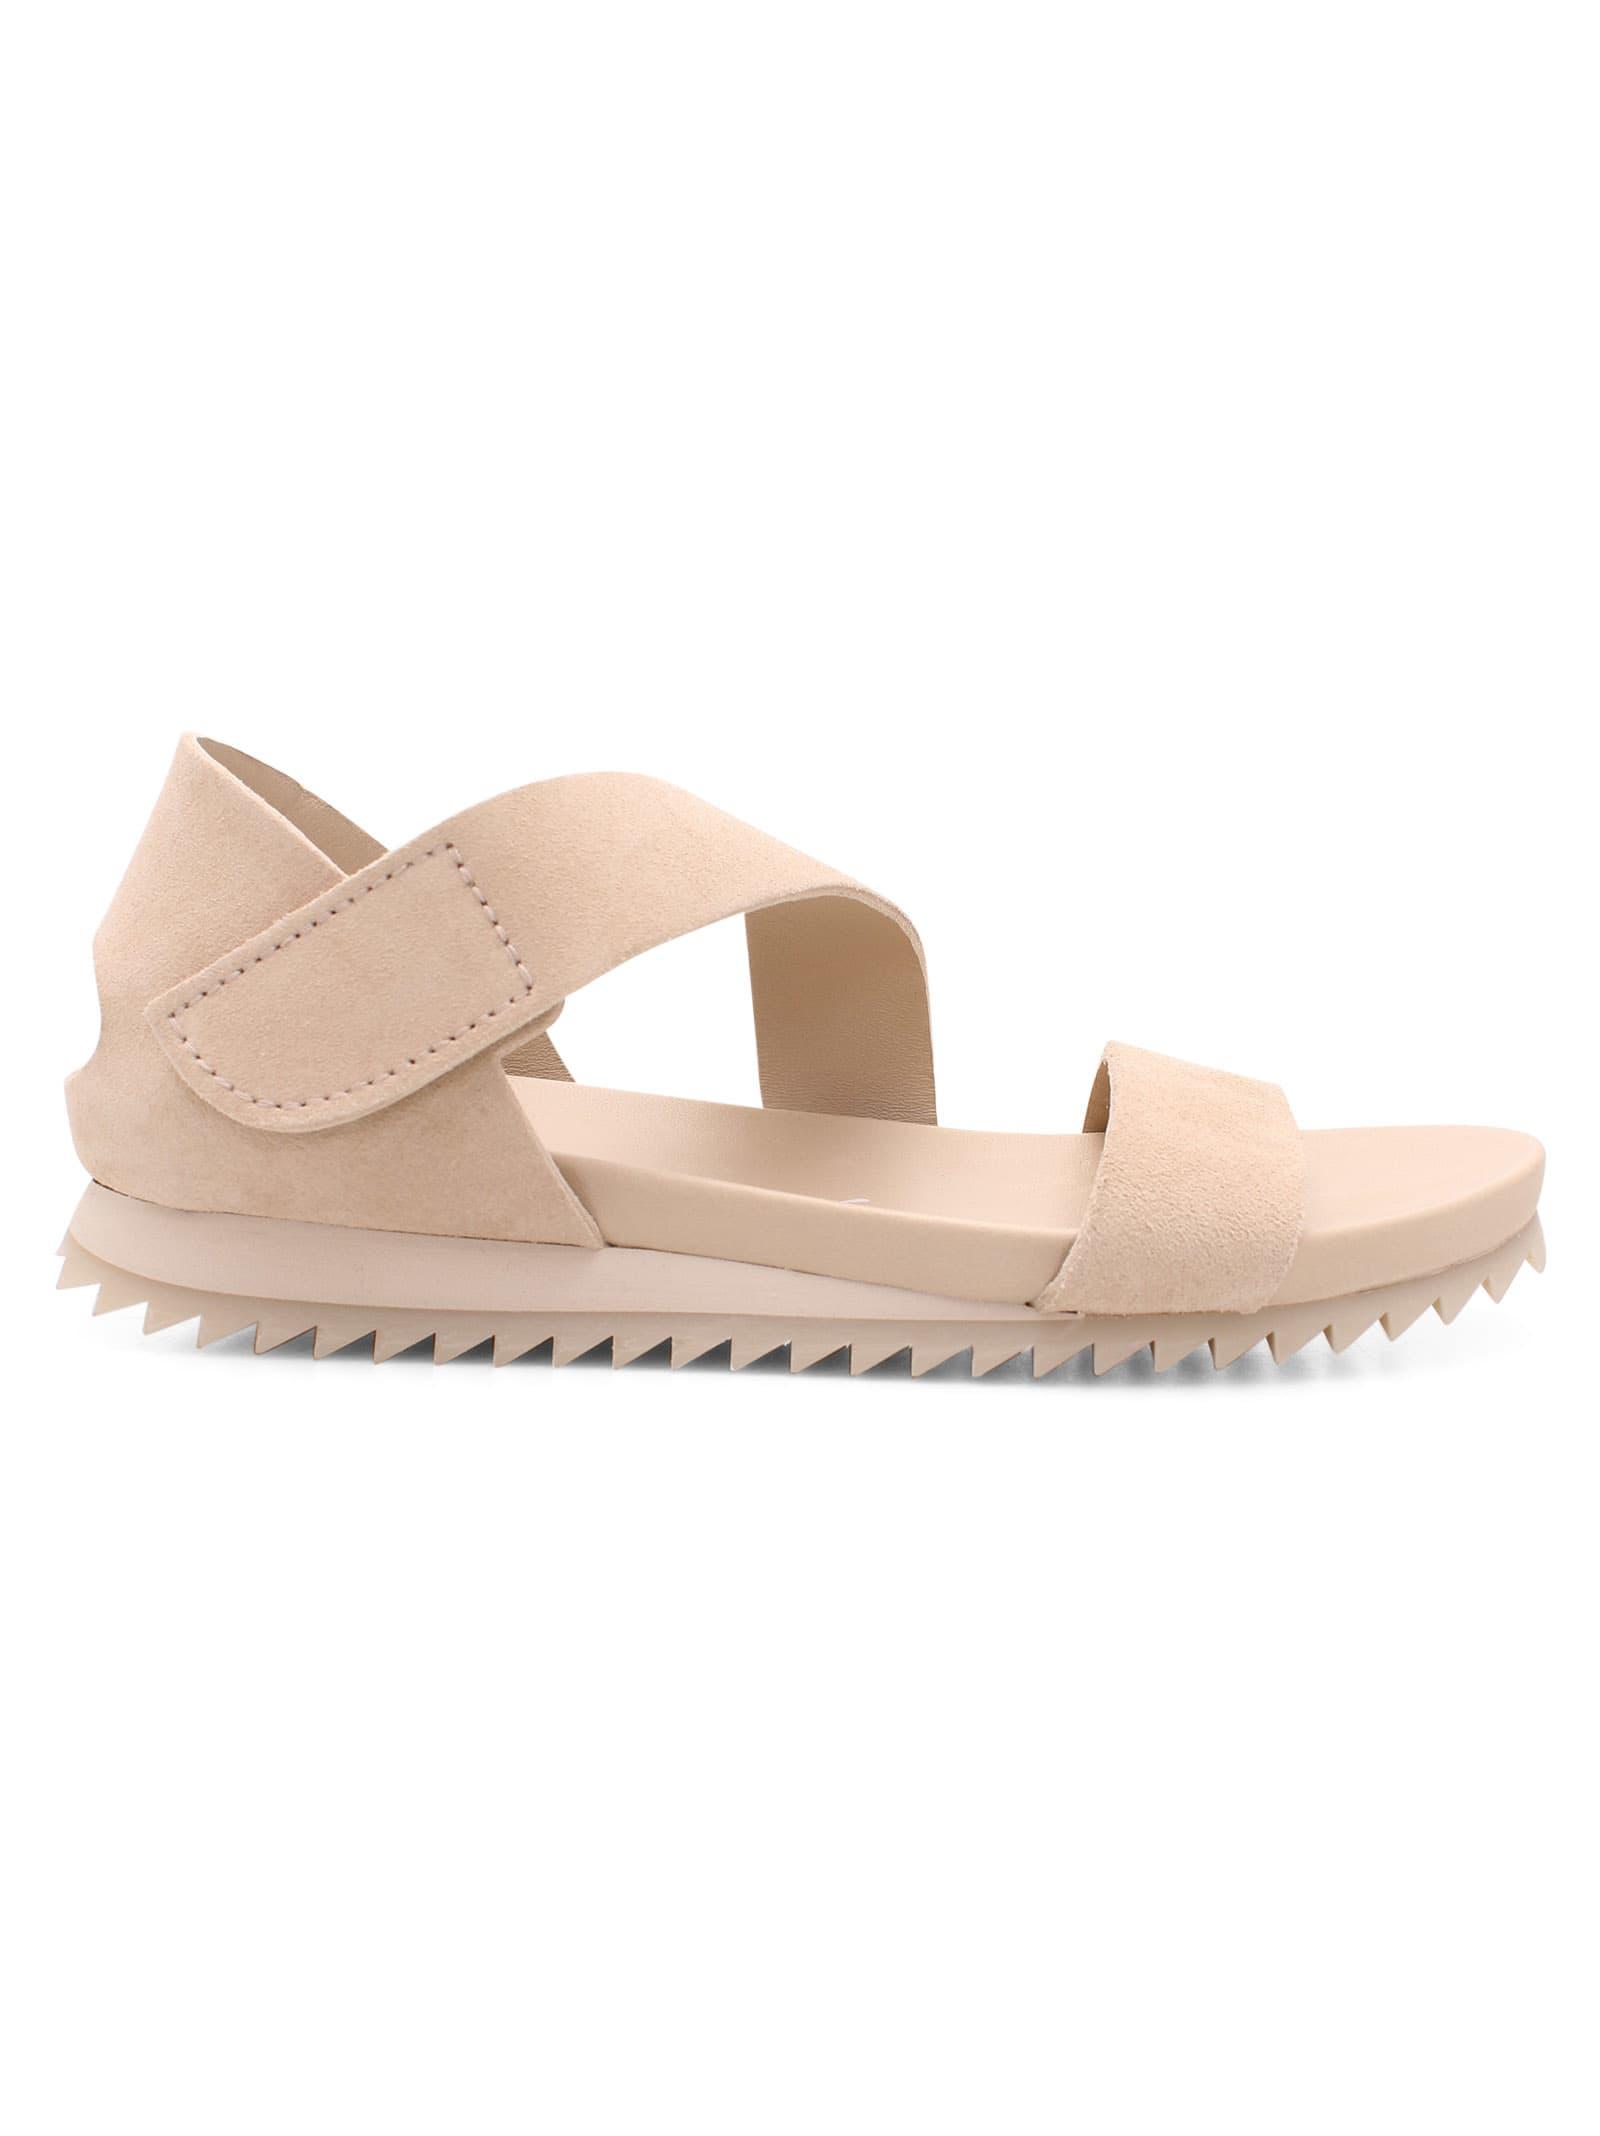 Pedro Garcia Jedda Leather Flat Sandals | Lyst